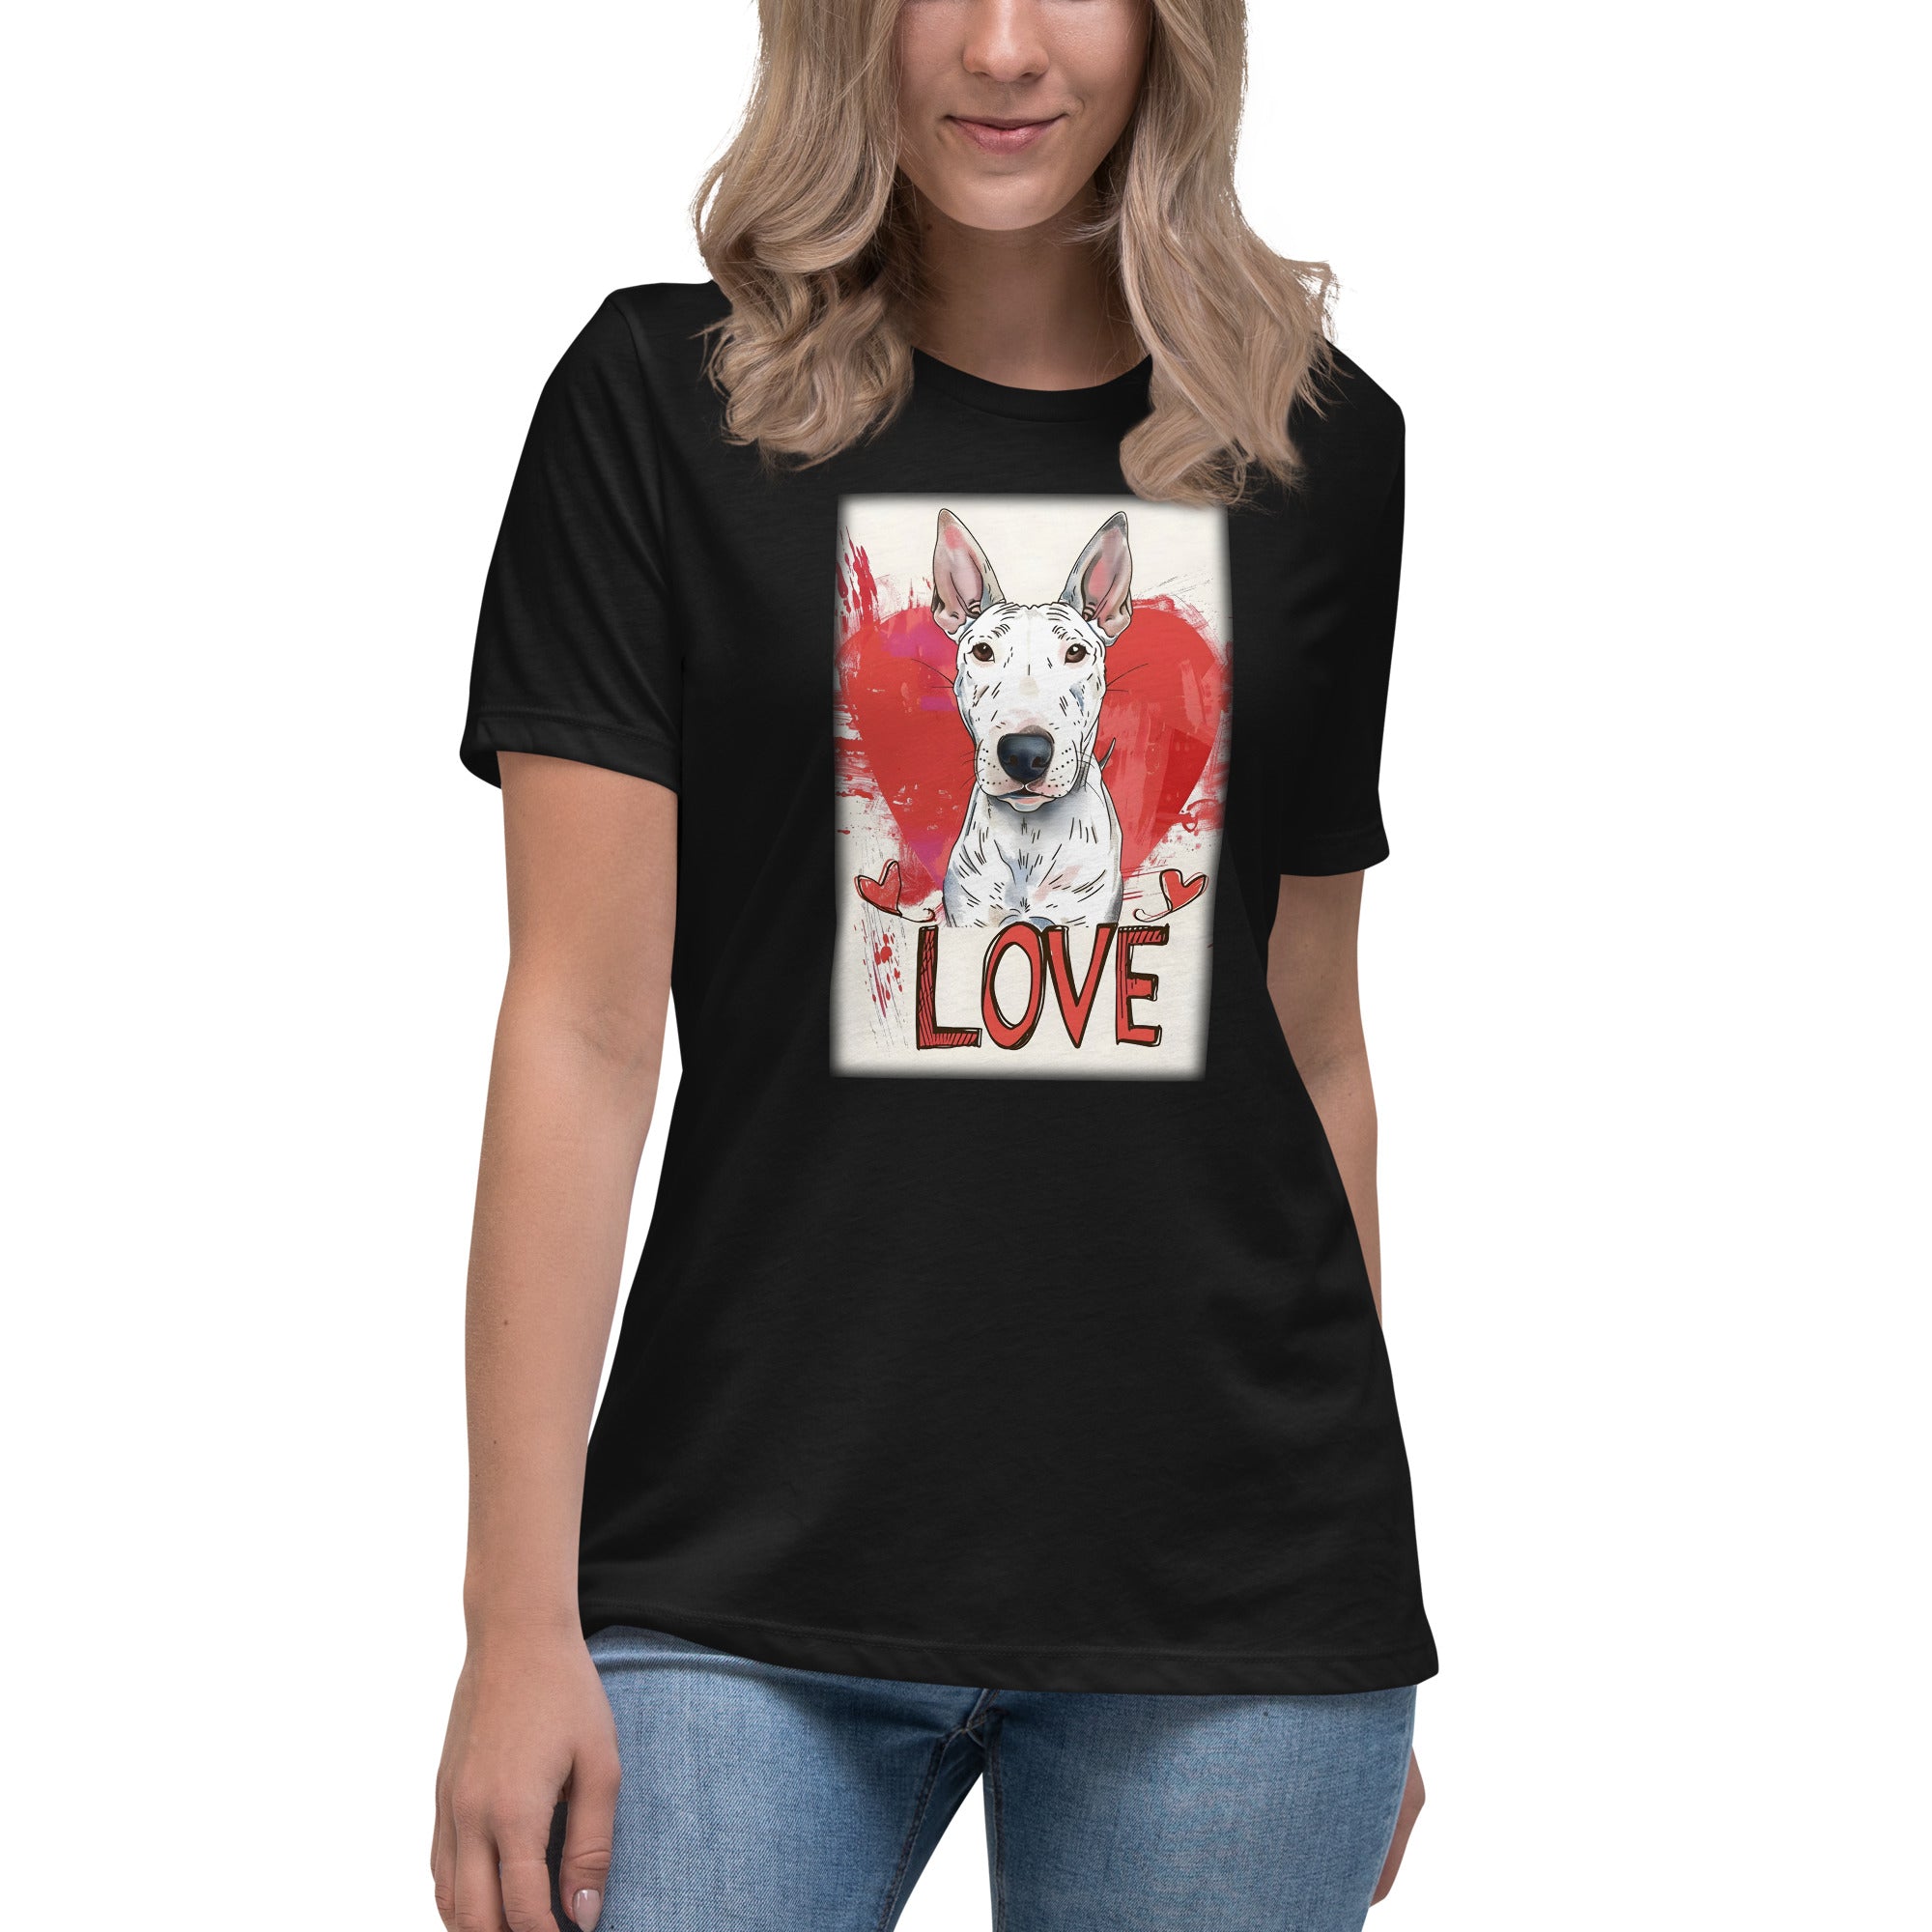 English Bull Terrier Women's Relaxed T-Shirt